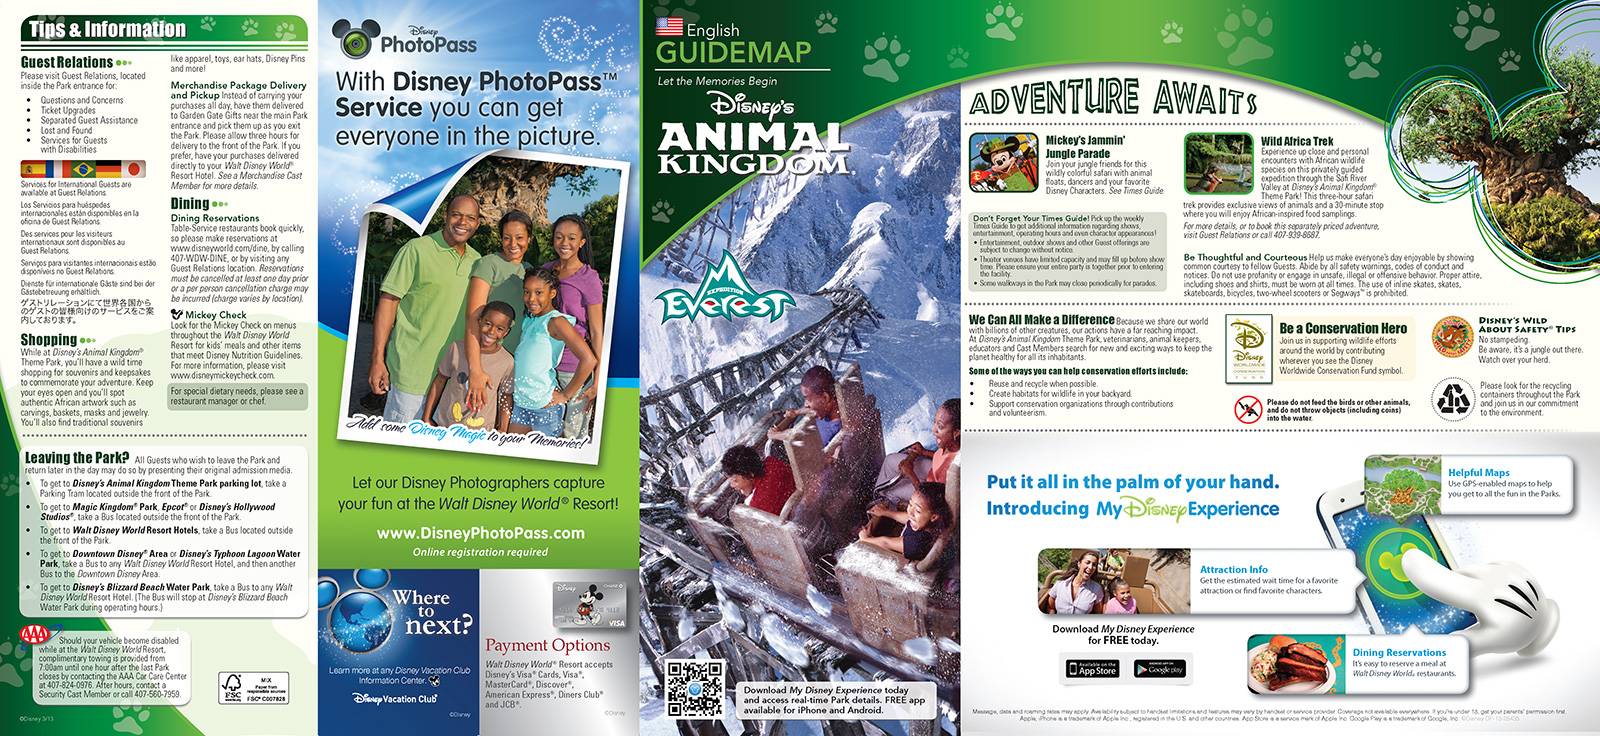 New 2013 Animal Kingdom Guidemap Page 1